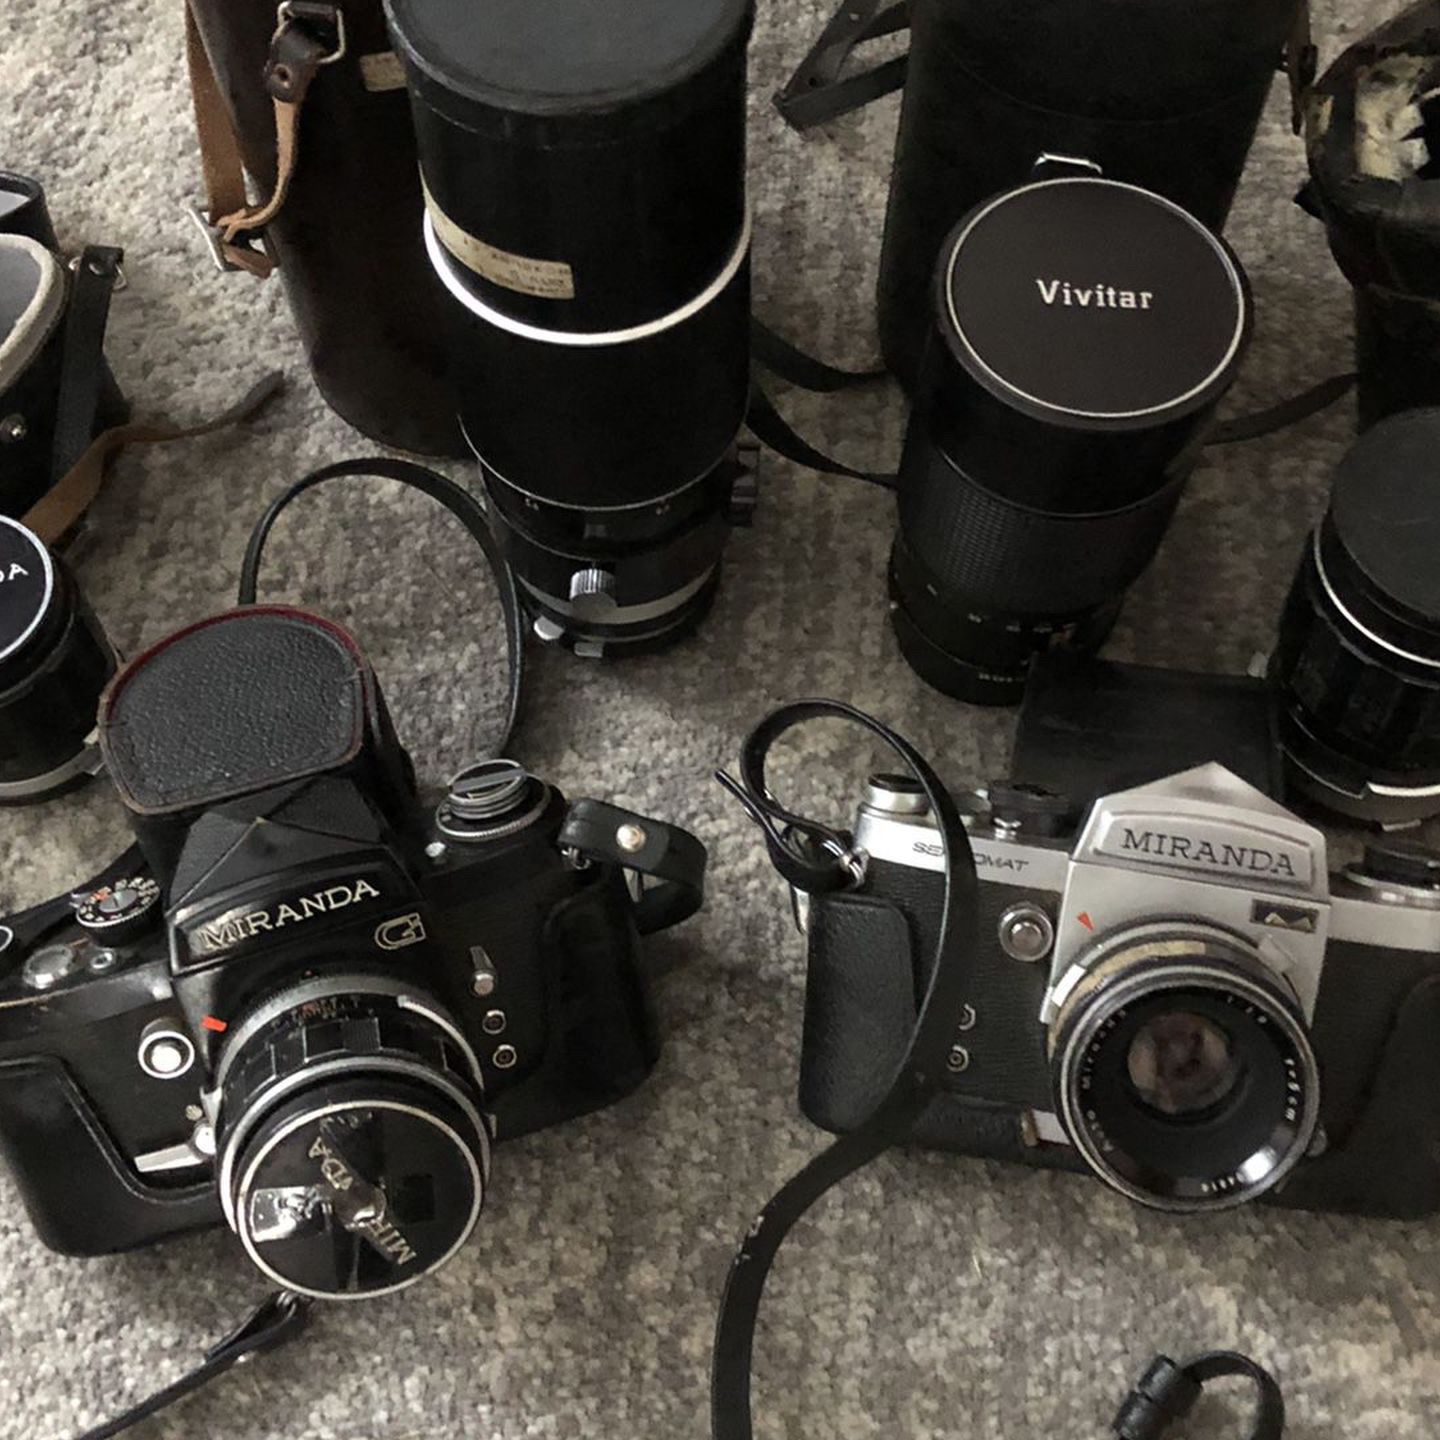 Miranda Cameras and various accessories